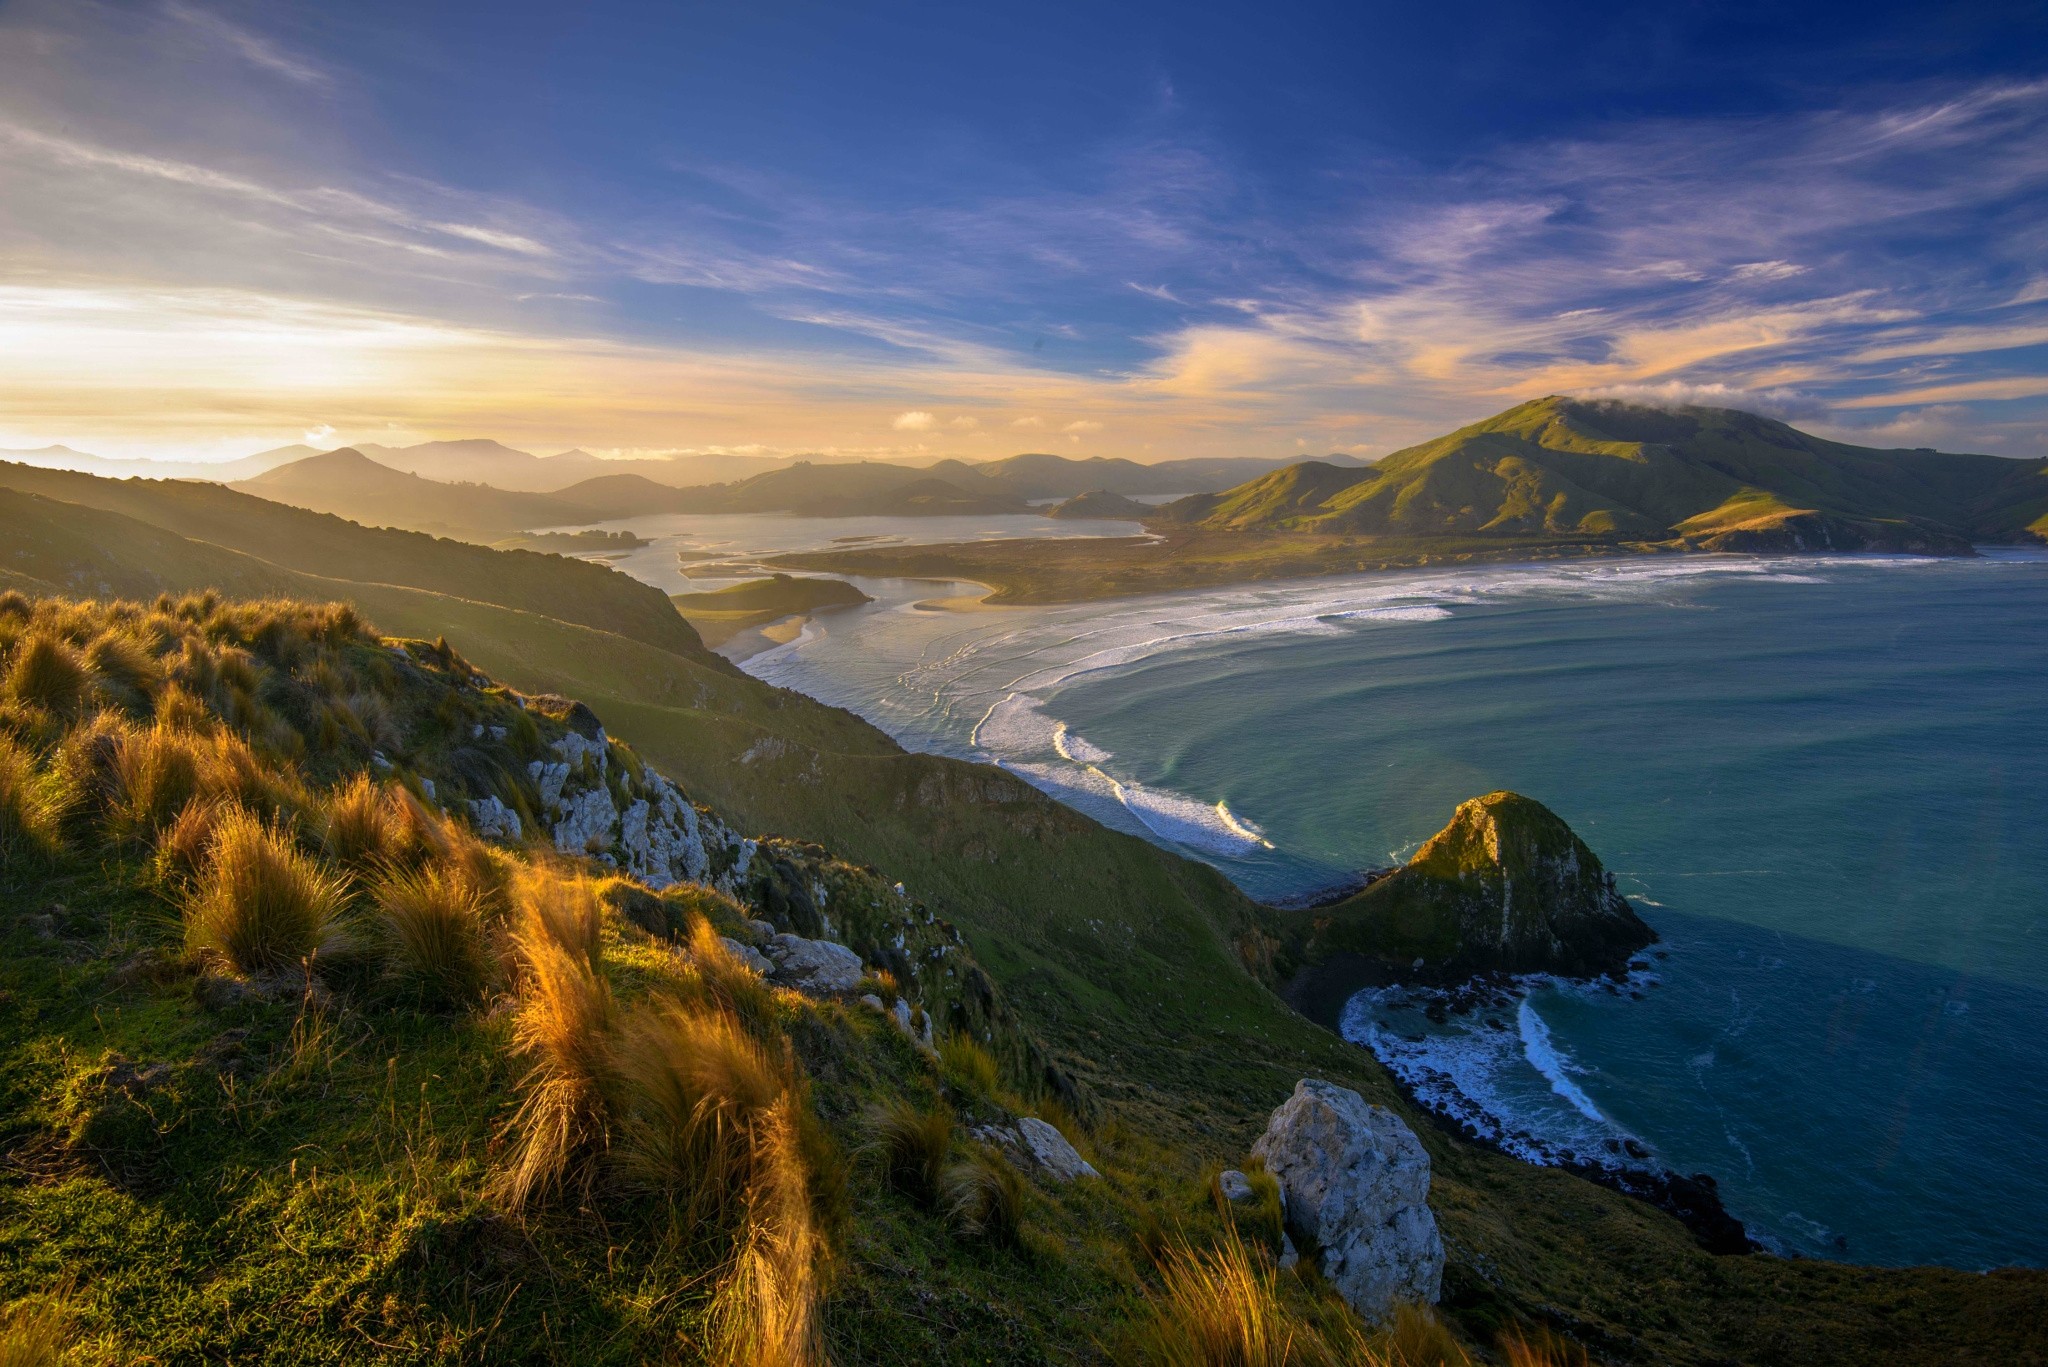 General 2048x1367 sunset beach grass New Zealand sea mountains clouds nature landscape